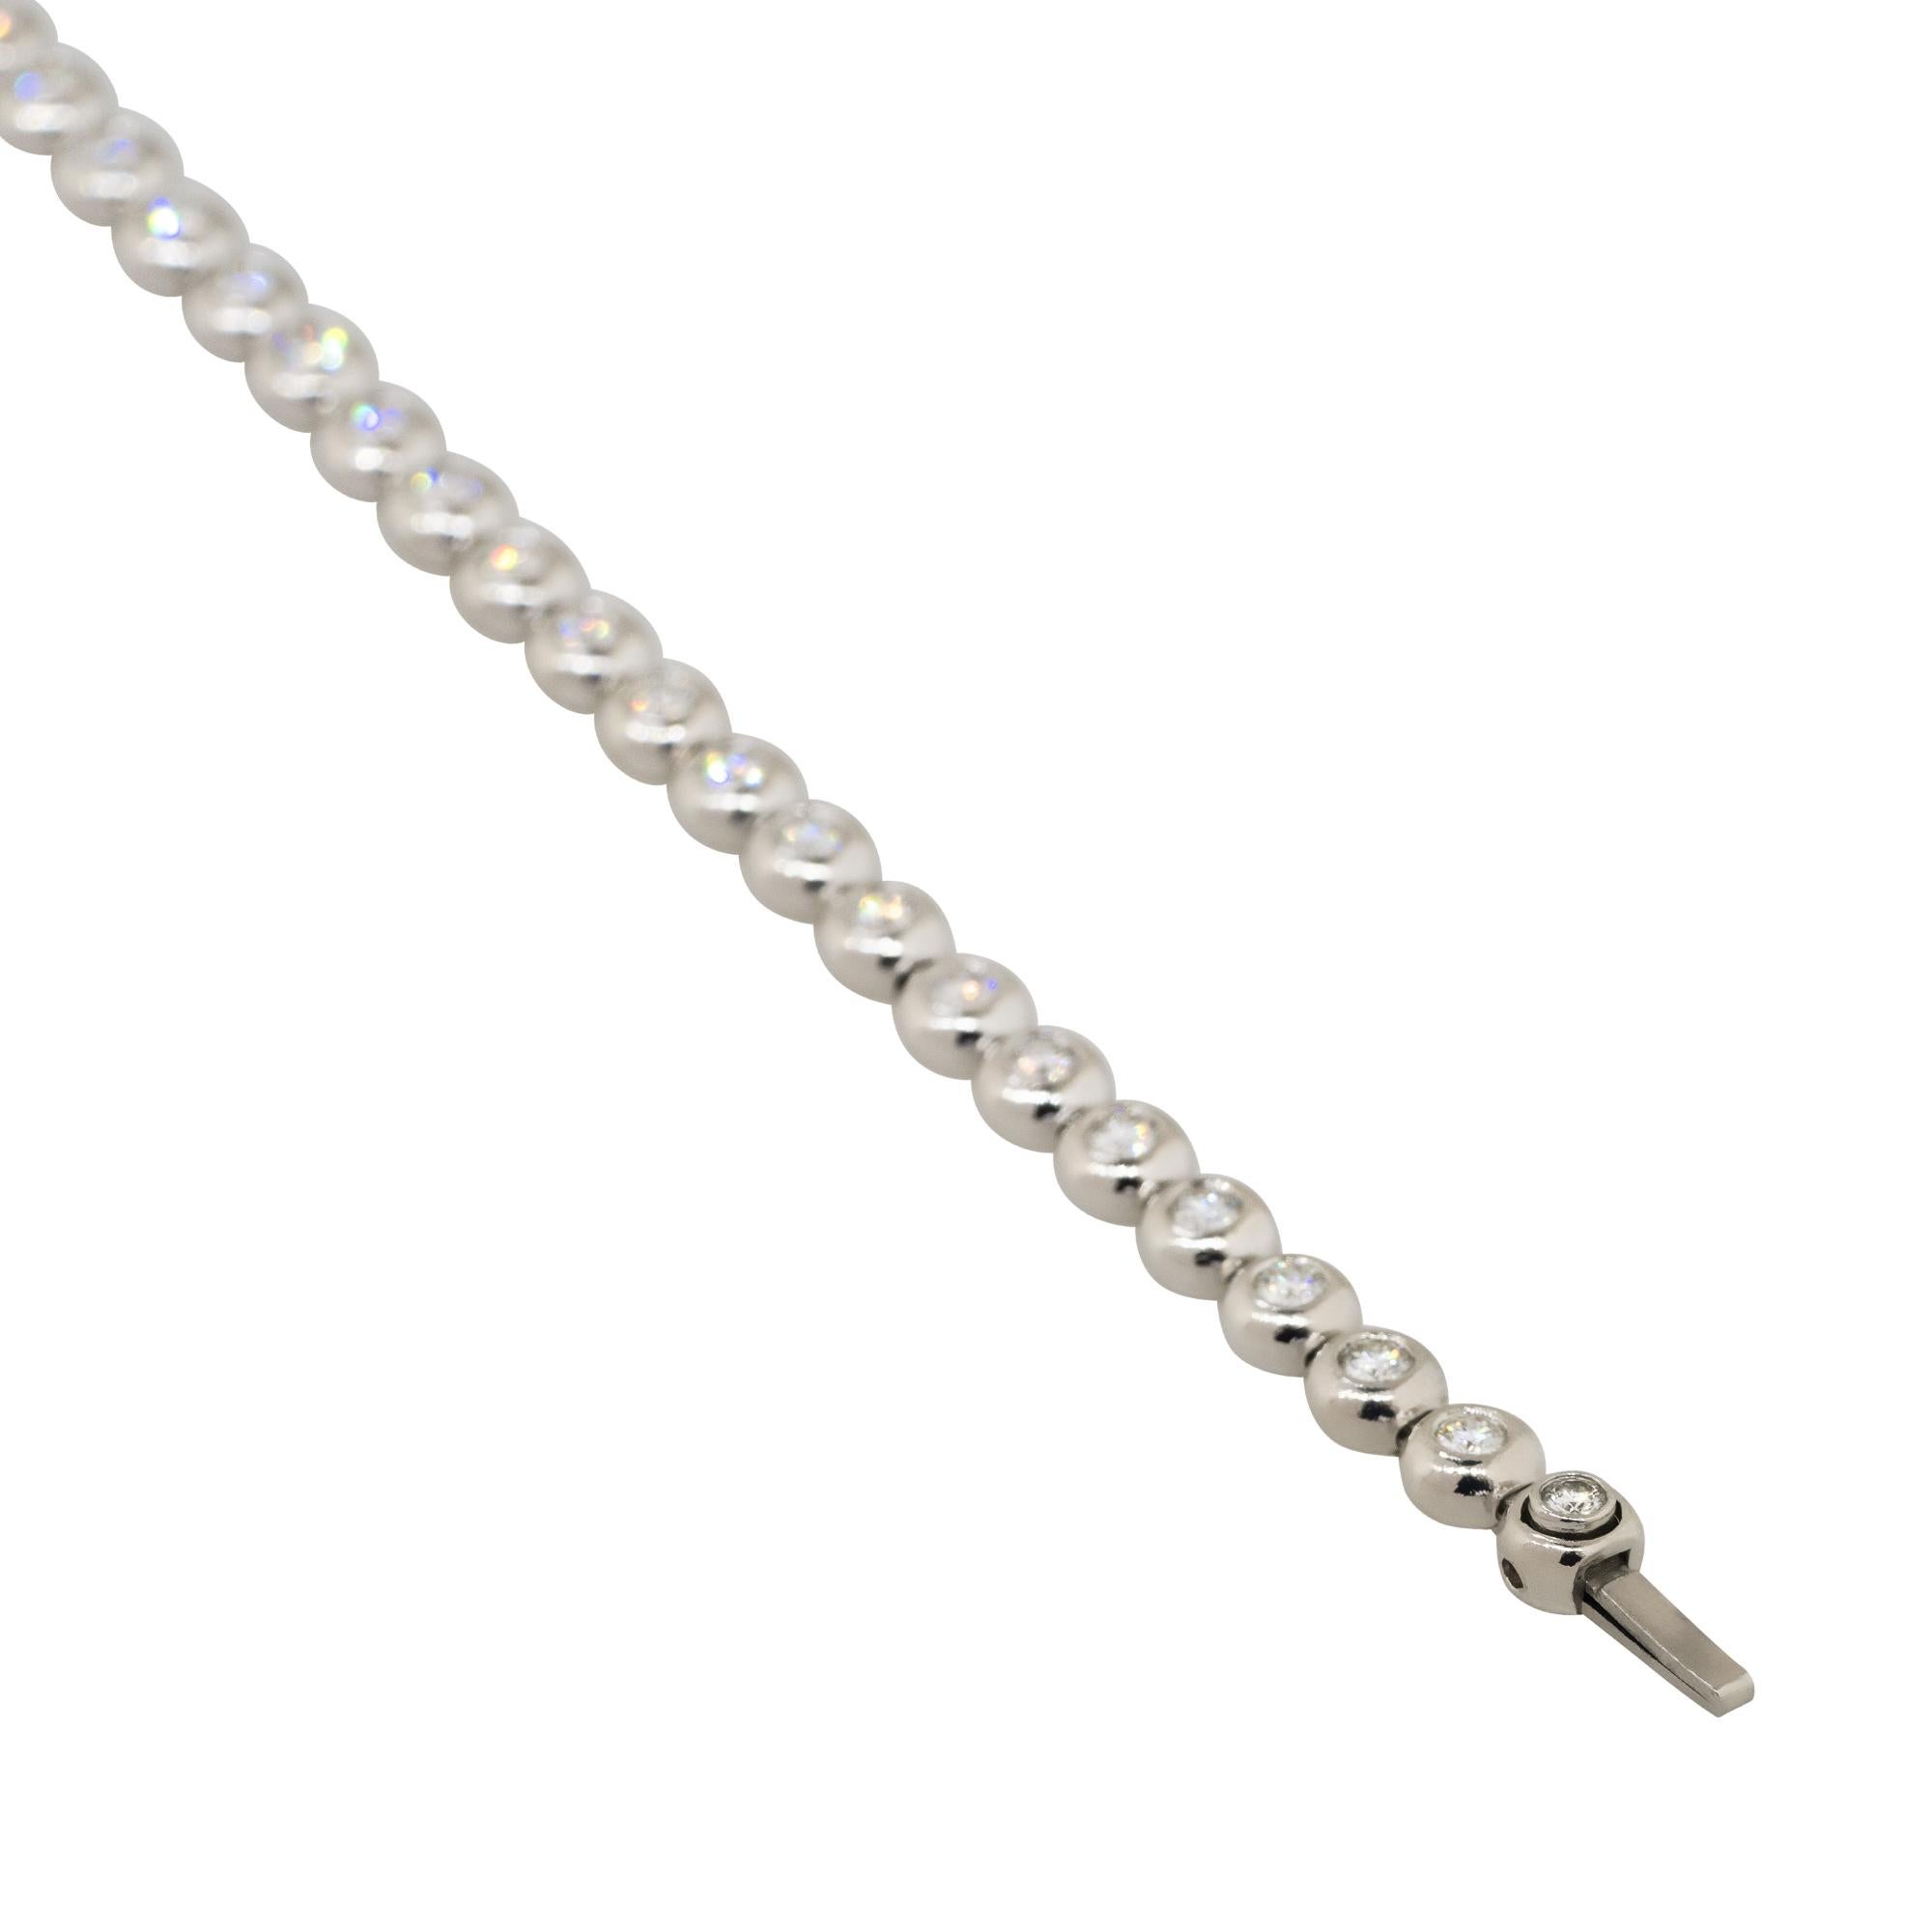 tiffany diamond bracelet